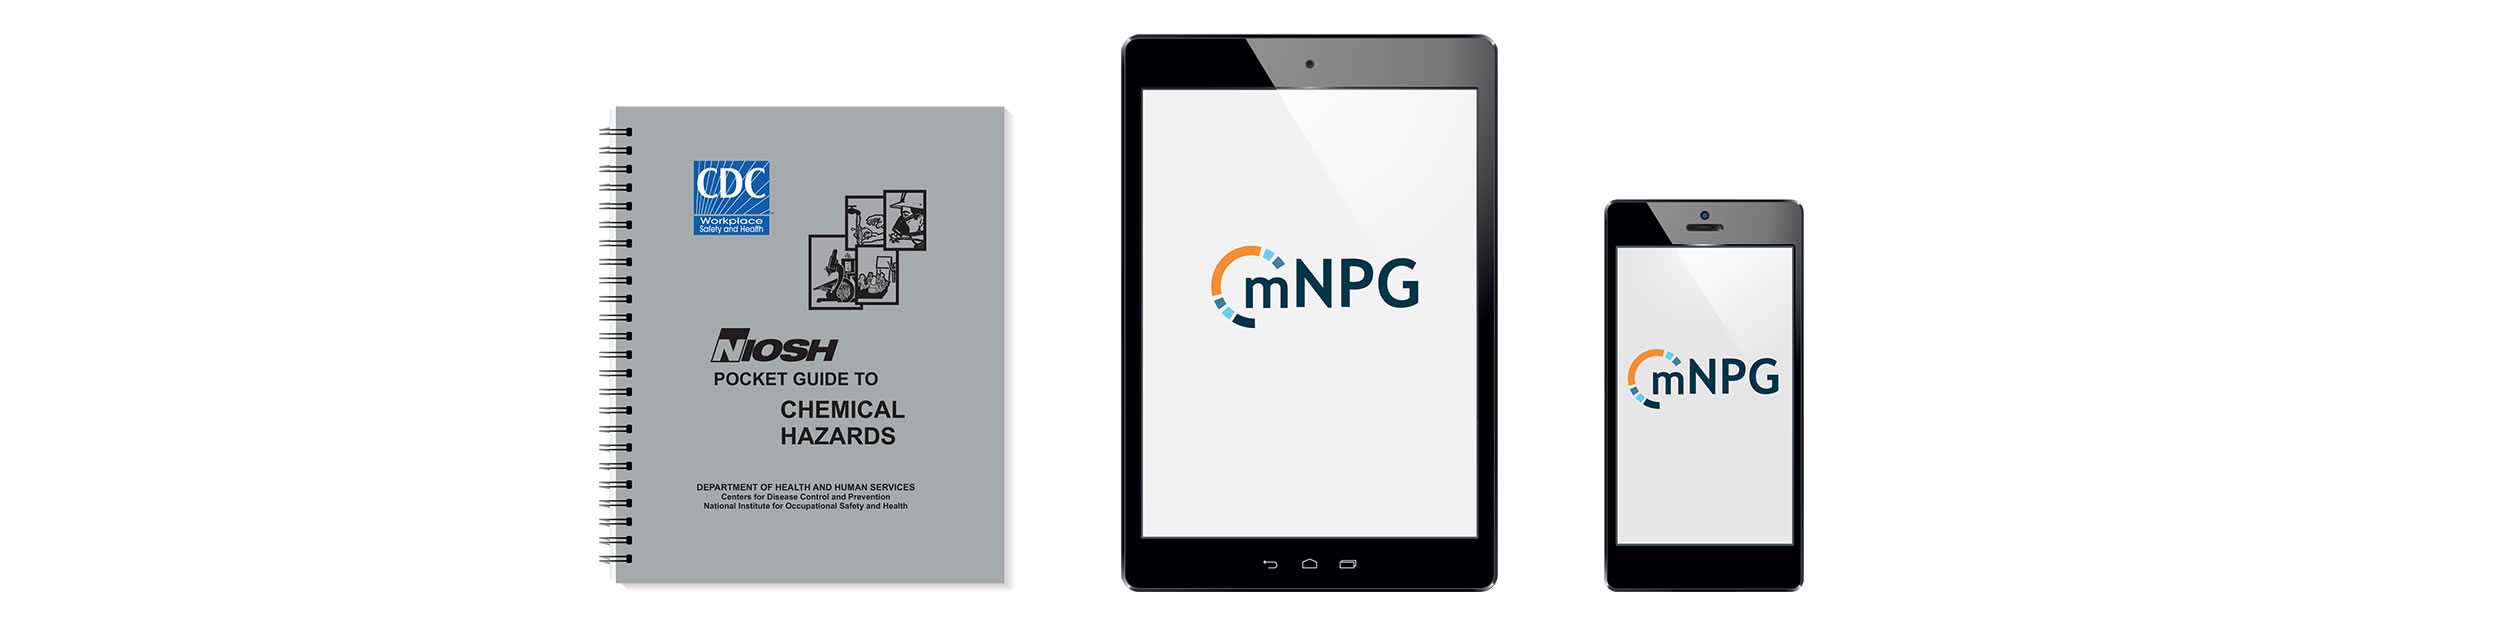 mNPG logo on an iPad and iPhone